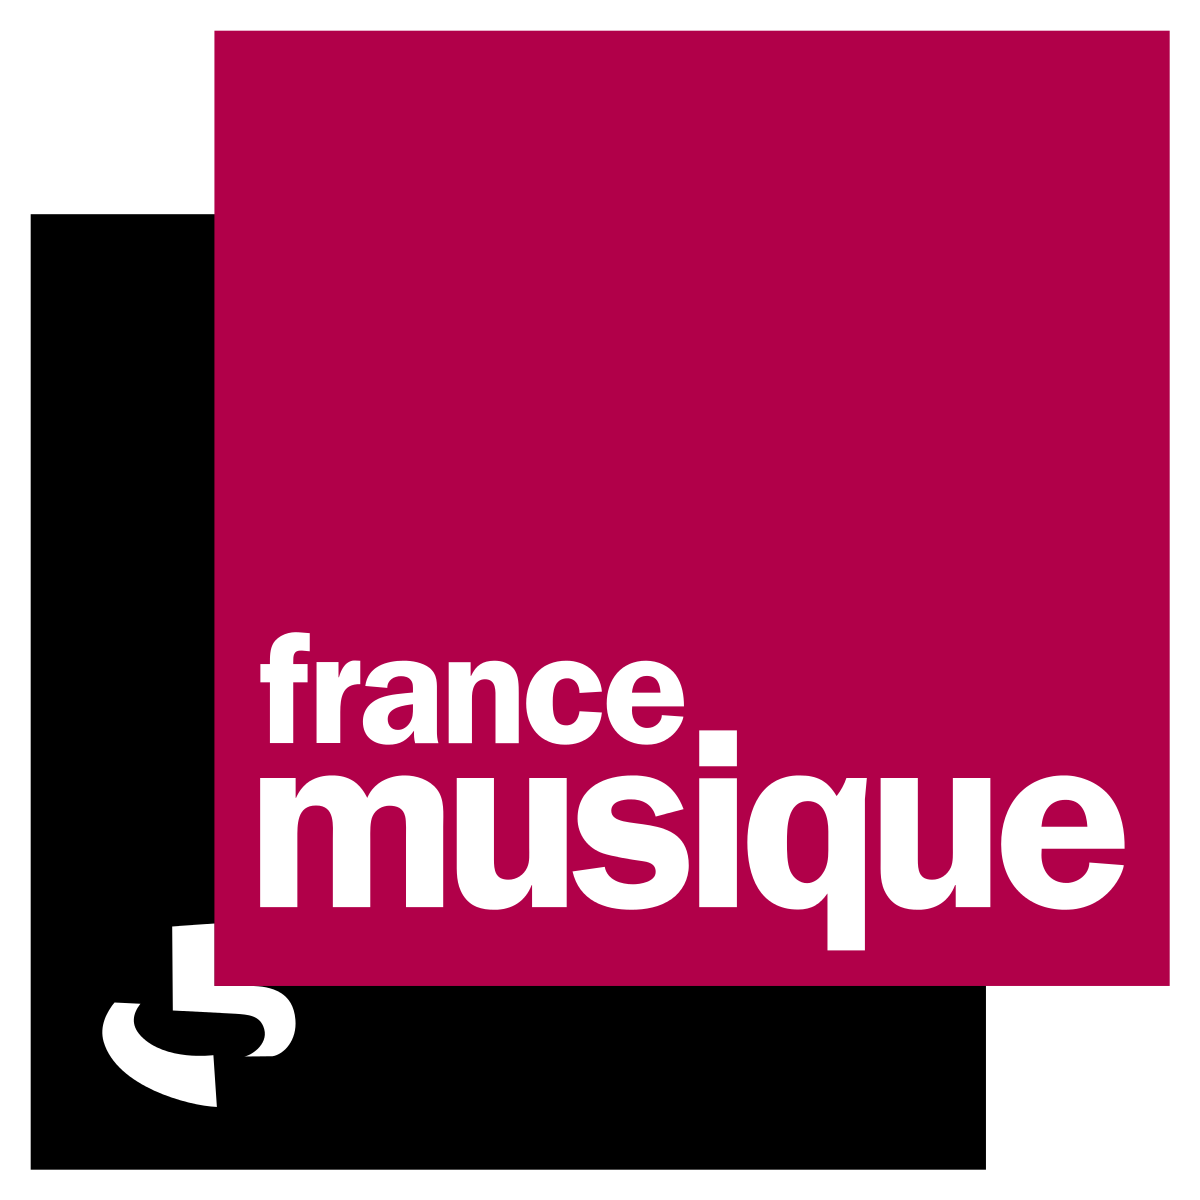 France_Musique_logo.png